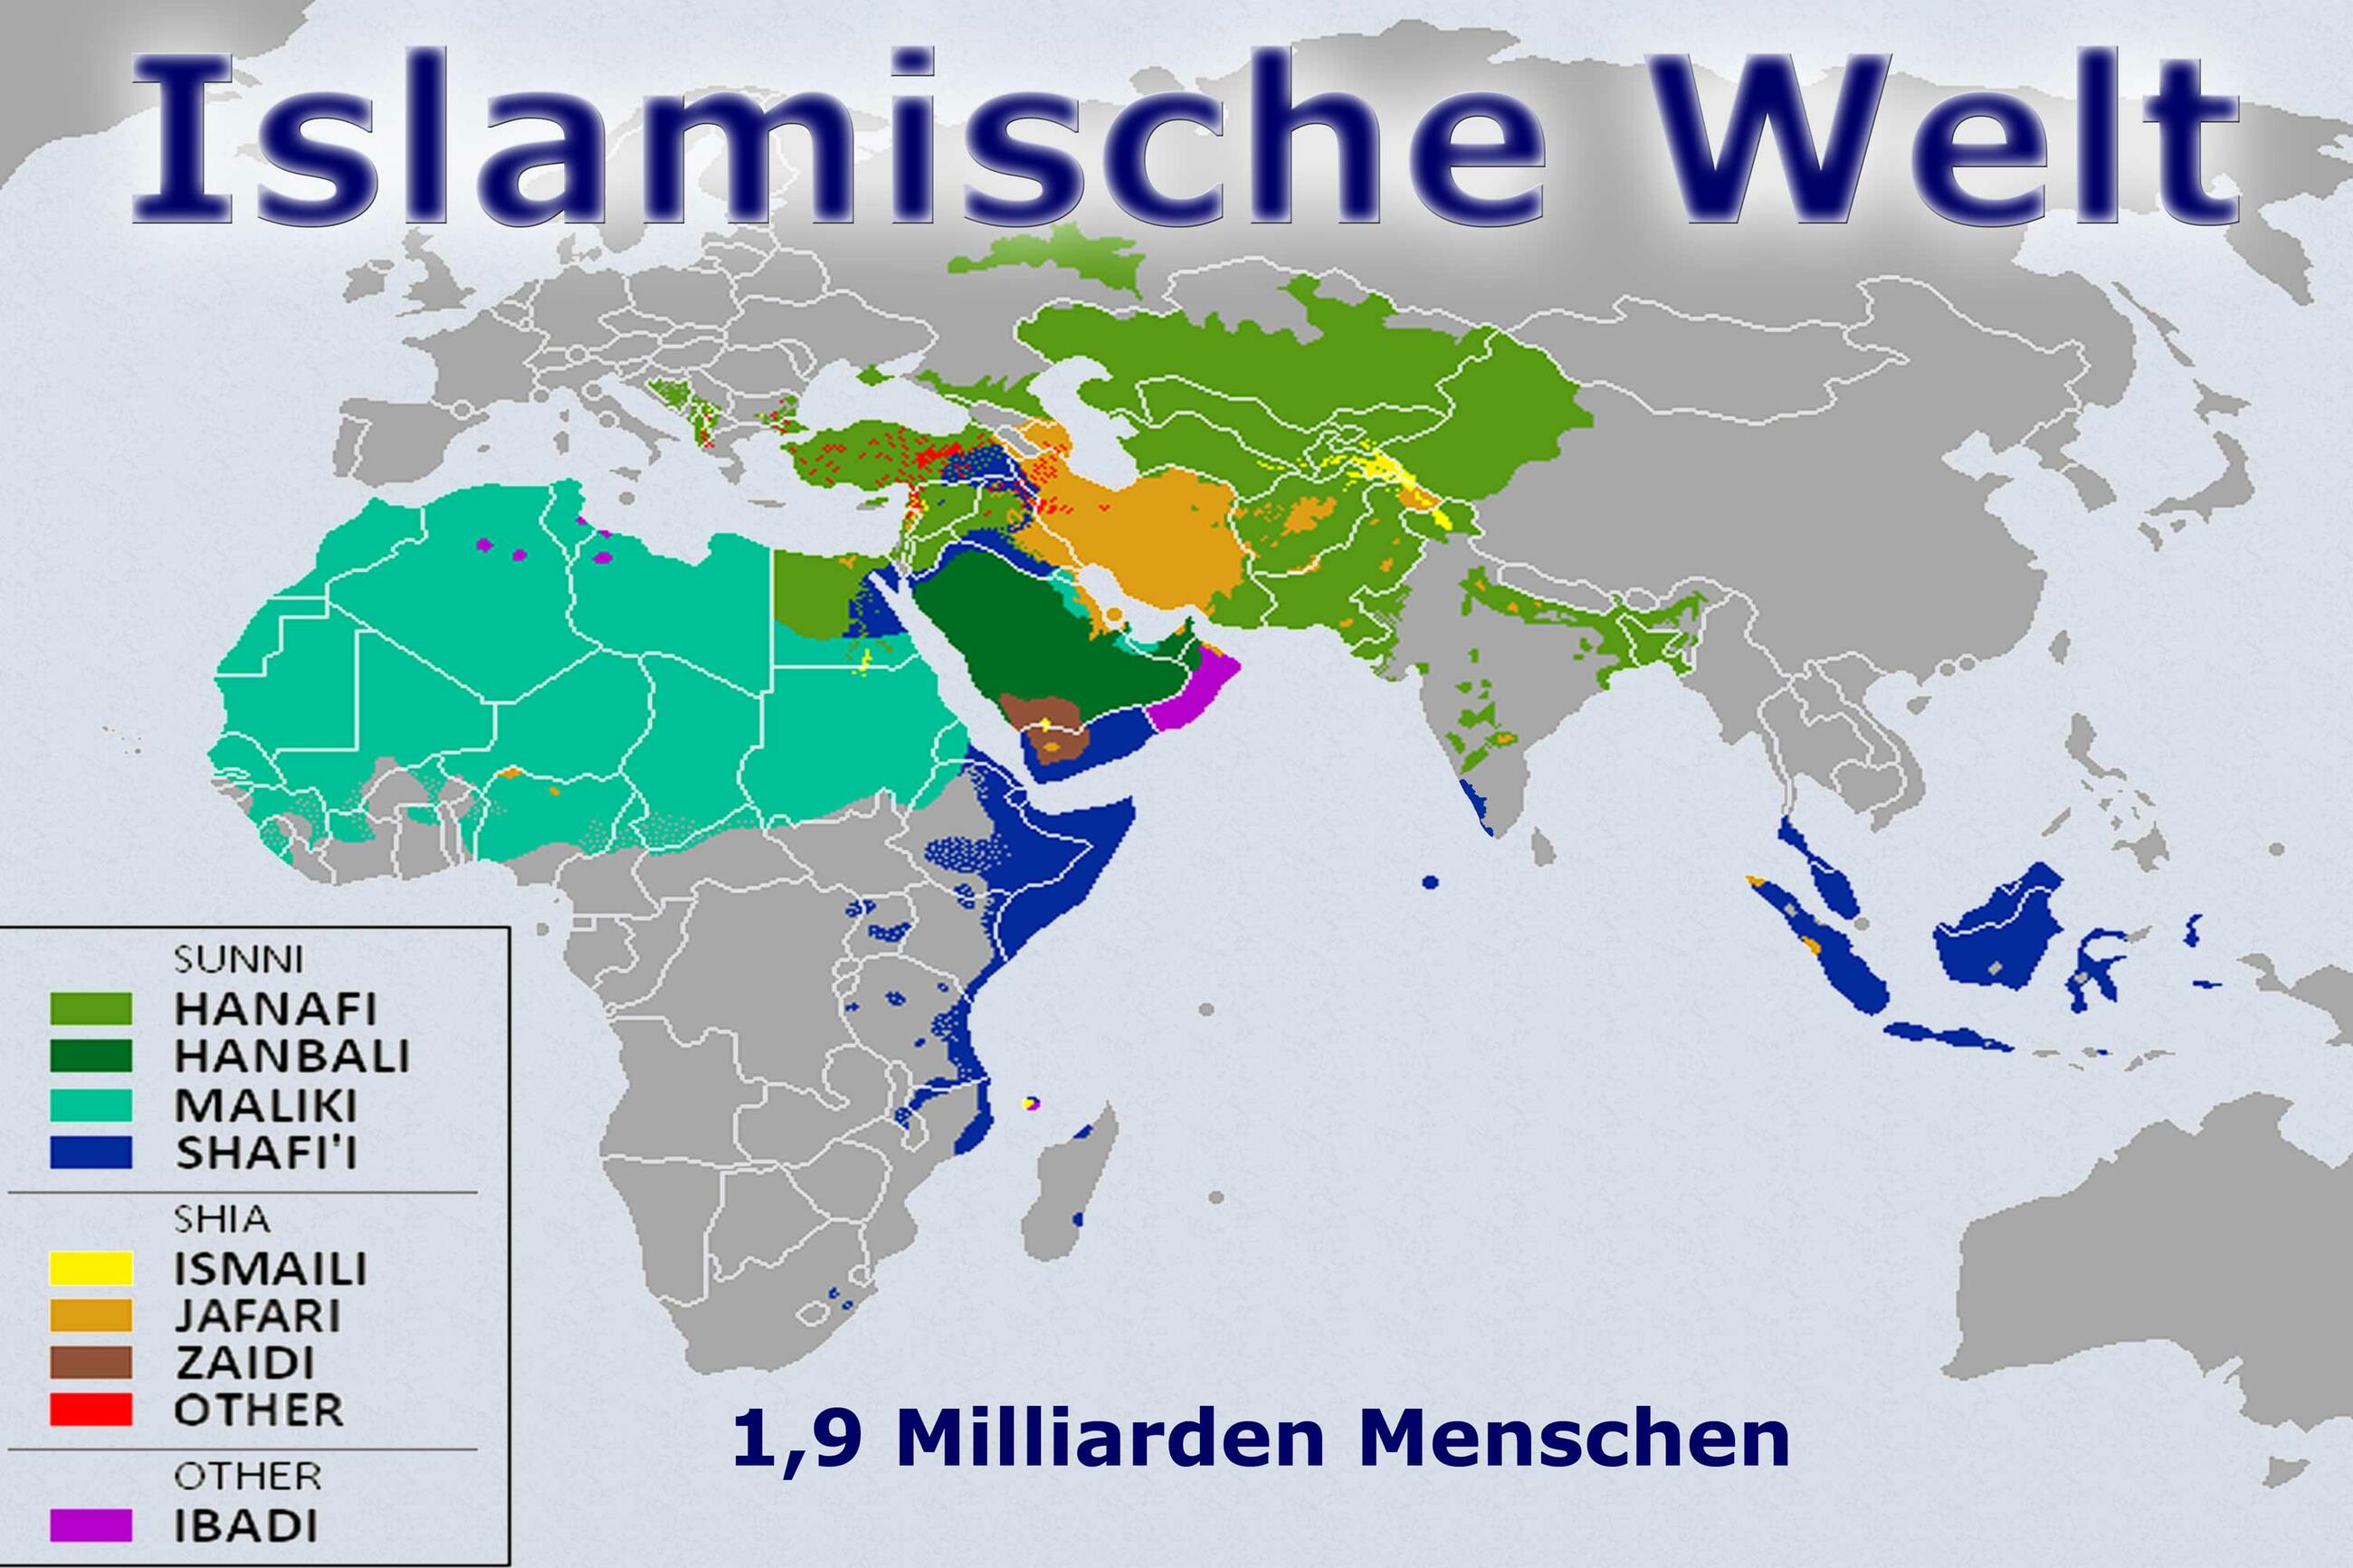 Islamische Welt